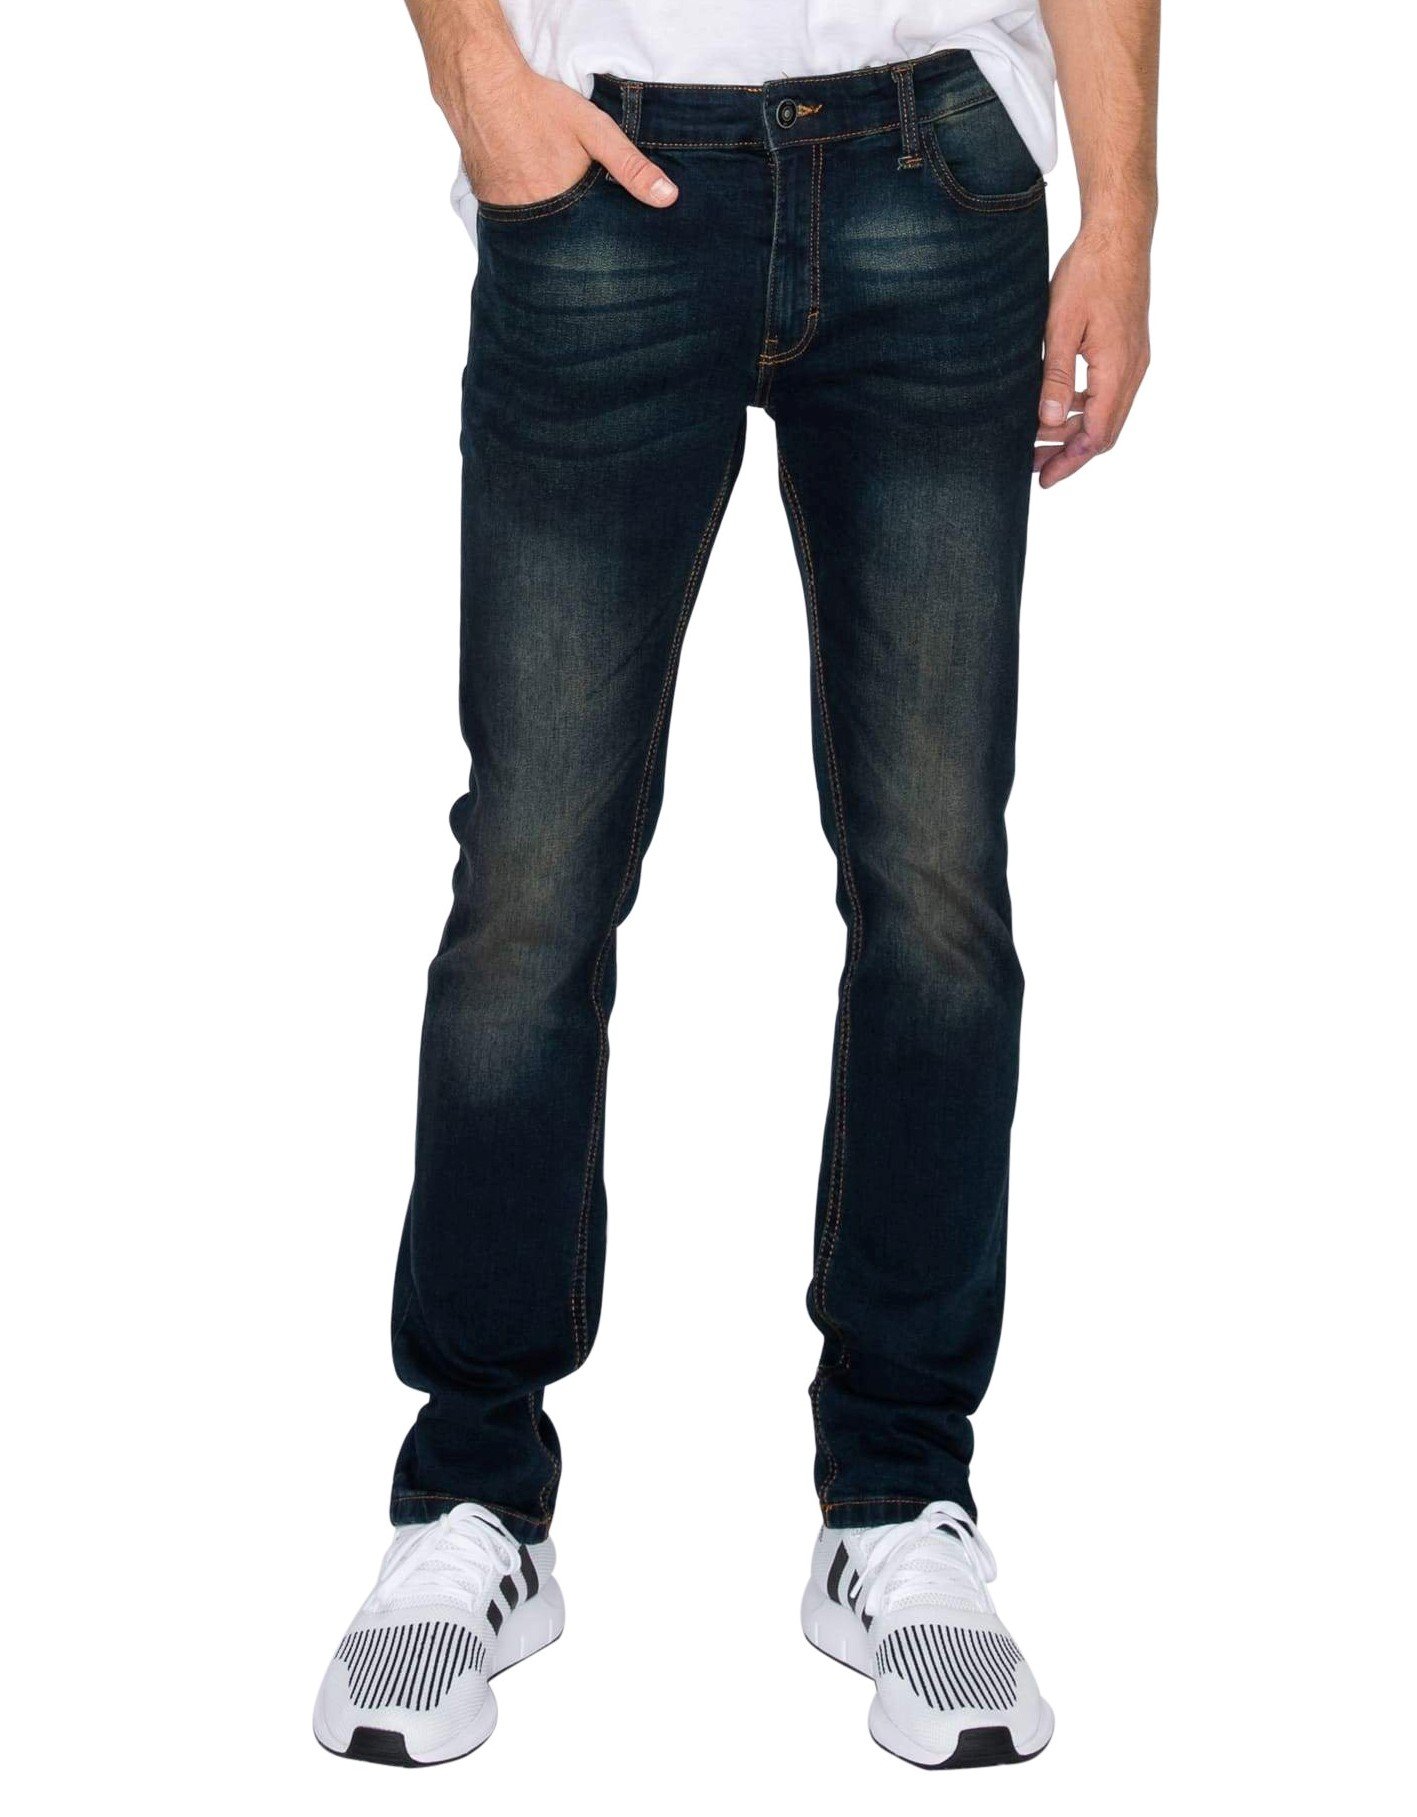 RING OF FIRE Men's 5 Pockets Slim Denim Stretch Jeans - image 1 of 6